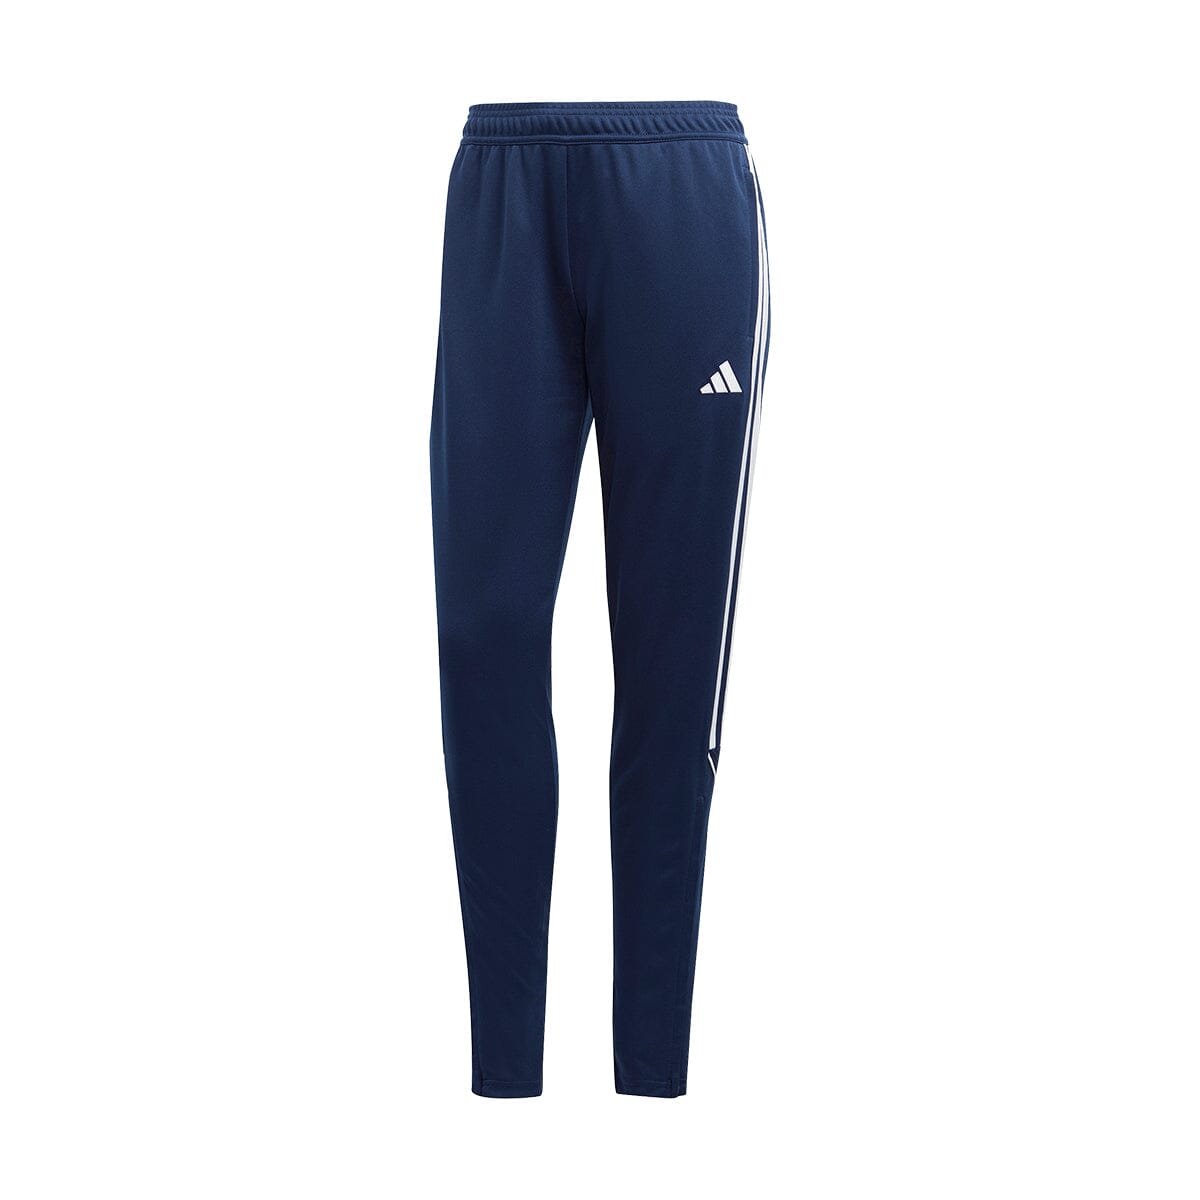 Men's Soccer Pants For Warm Up & Play  Comfortable & Stylish - Goal Kick  Soccer